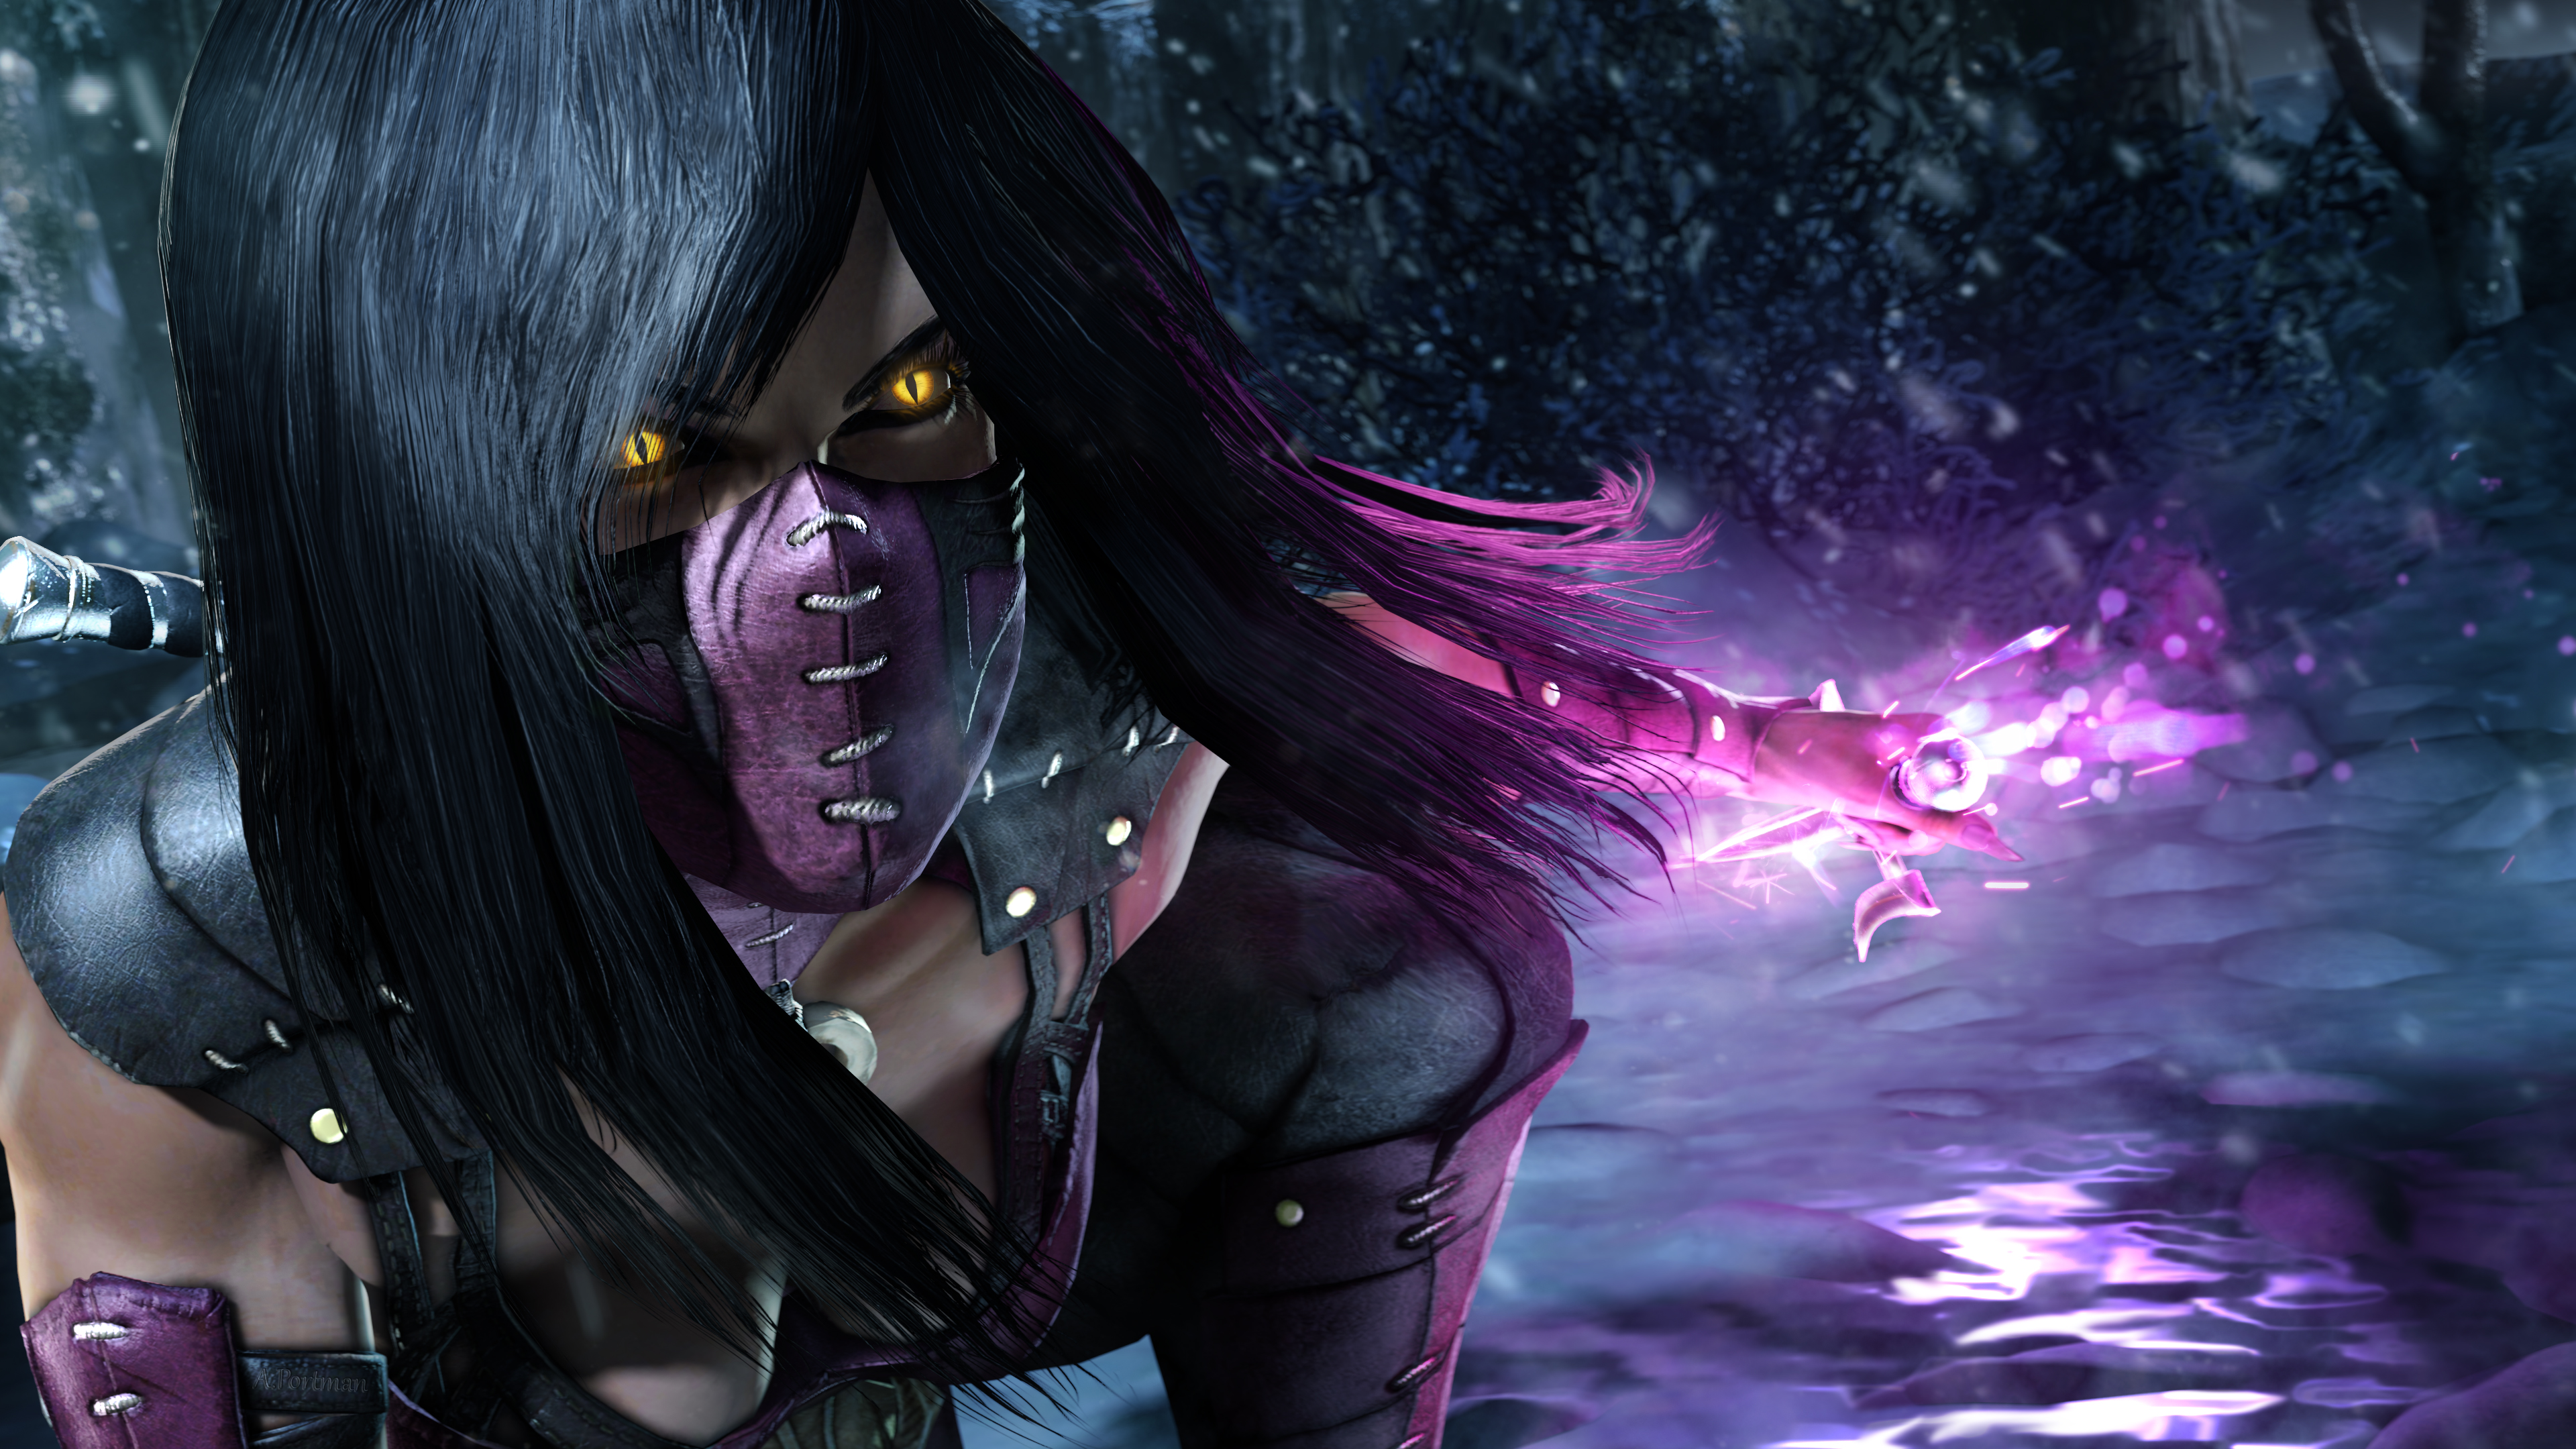 Mortal Kombat X 4k Ultra HD Wallpaper Background Image